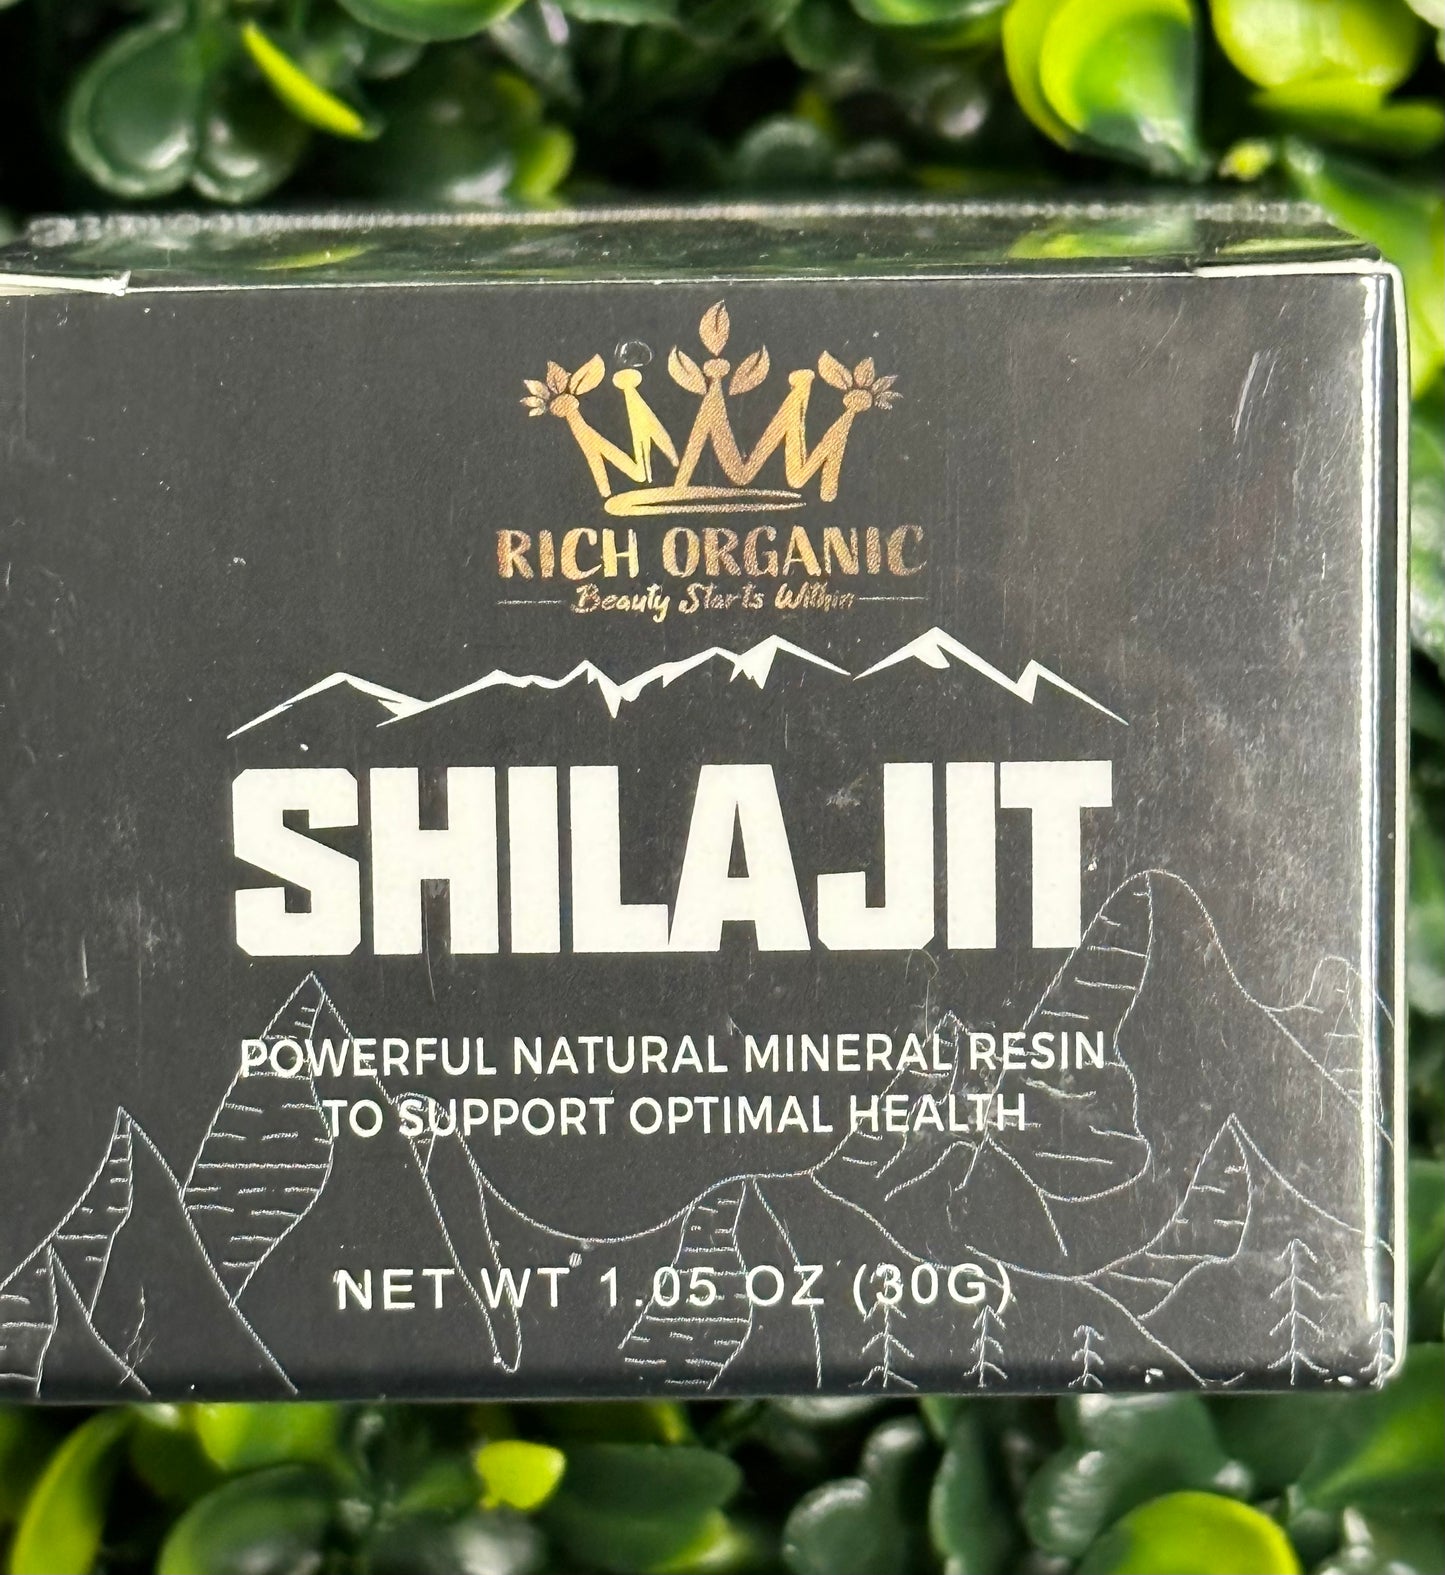 100% Pure Organic Shilajit from the Himalayan Mountains